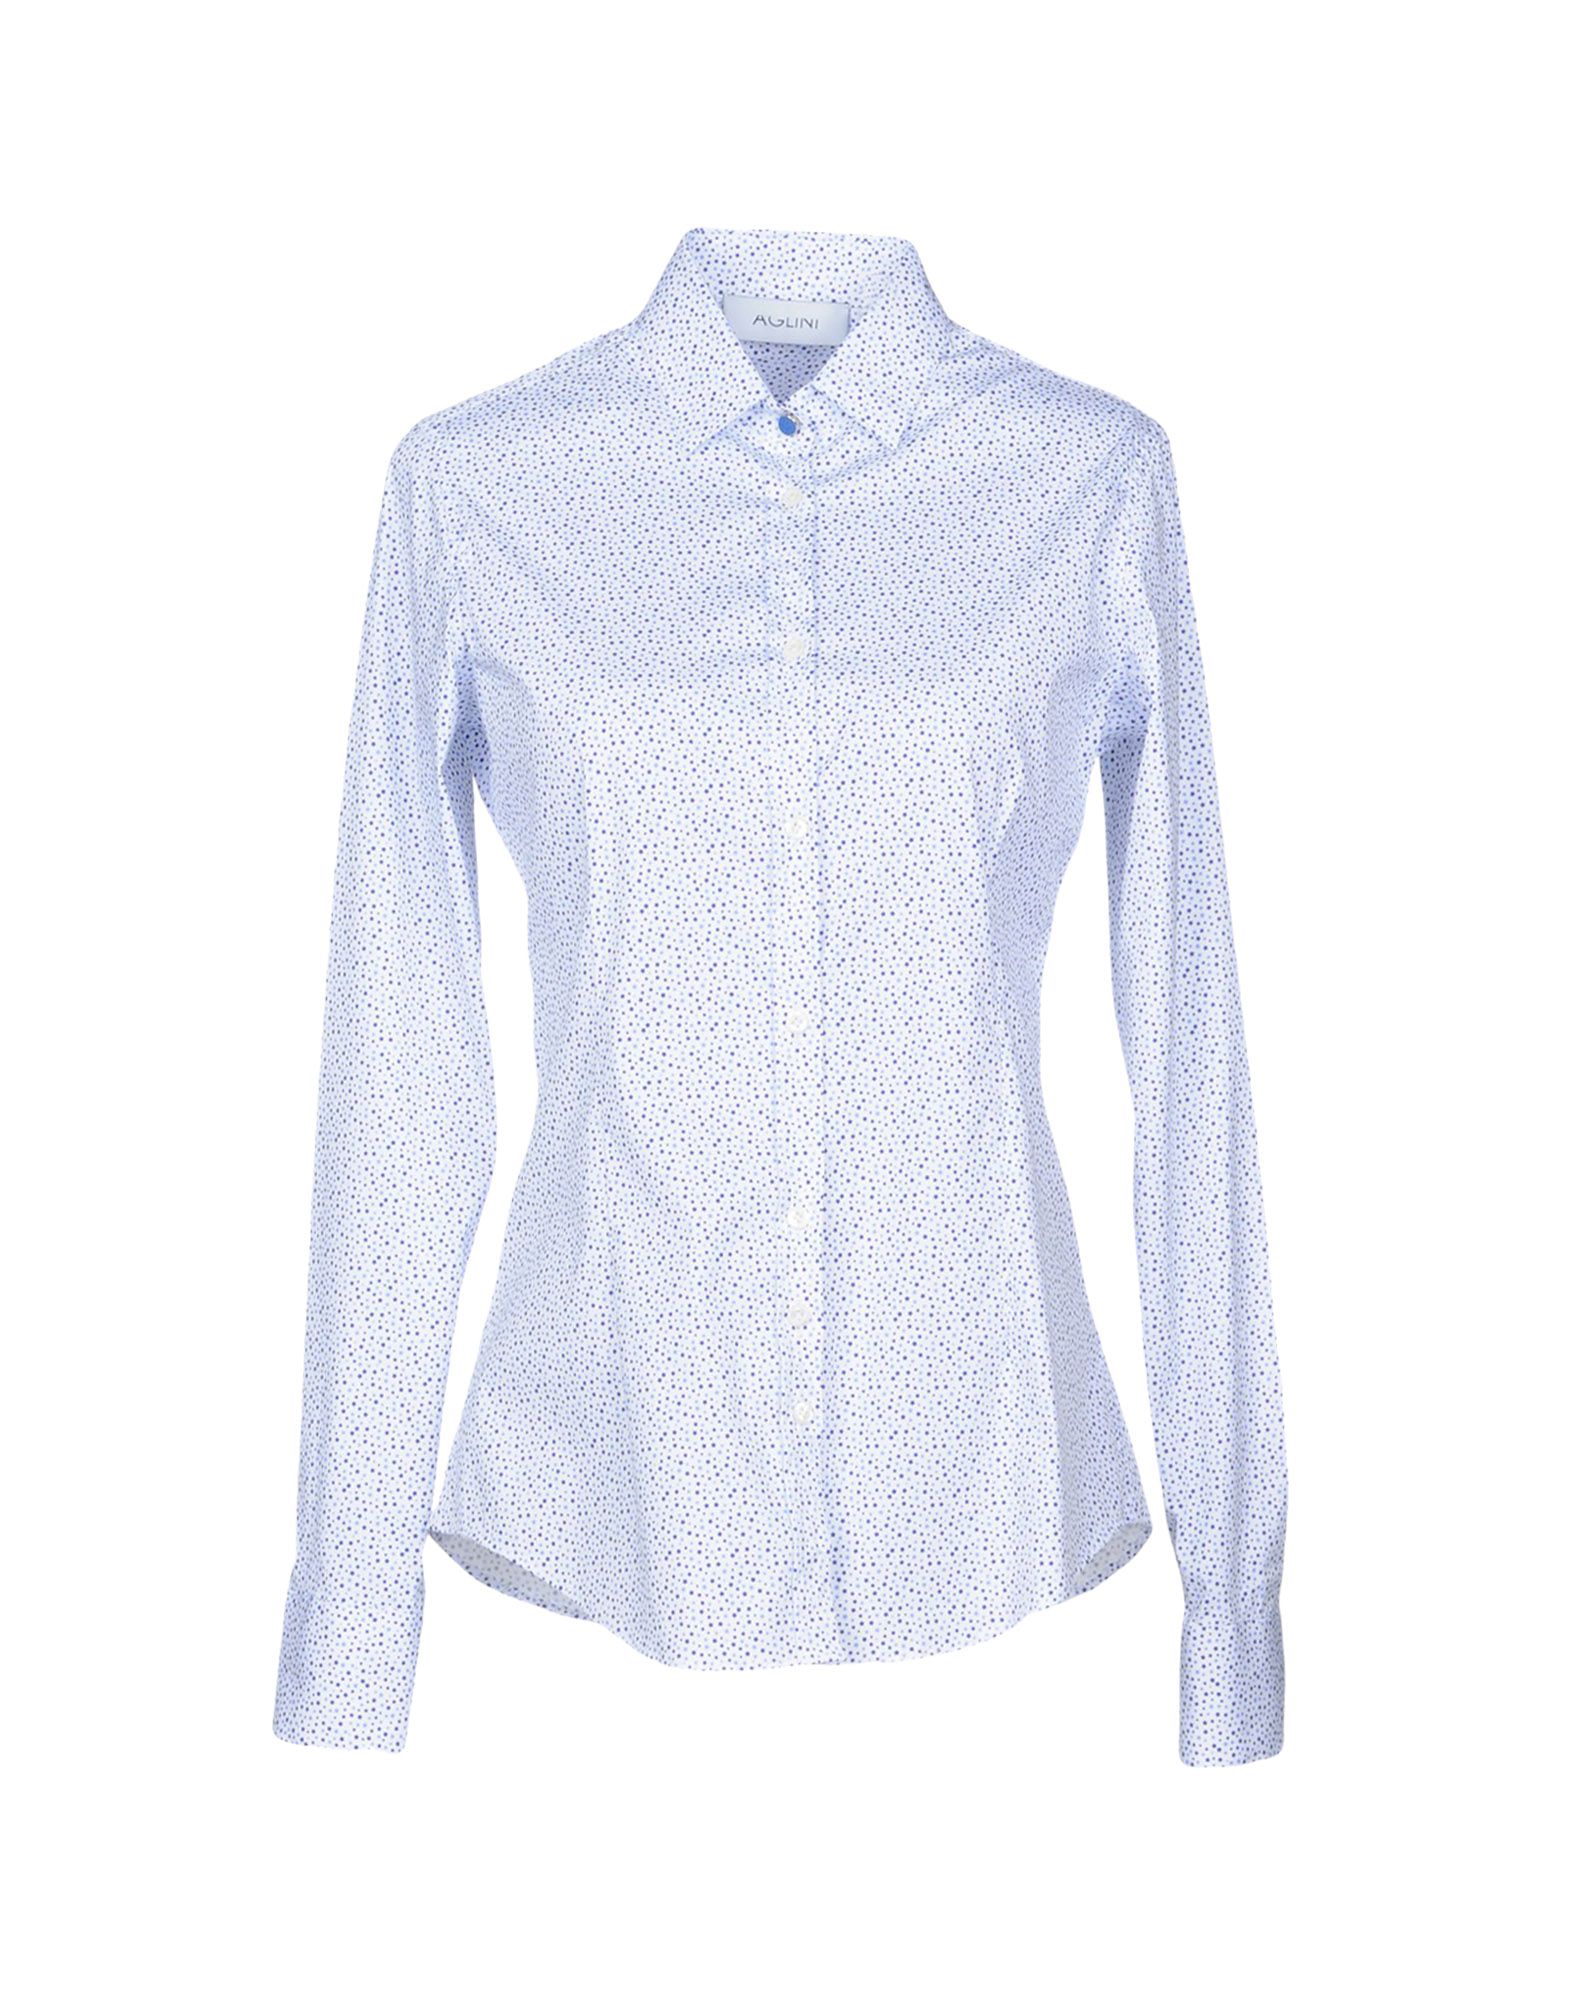 AGLINI Patterned shirts & blouses,38746489XI 8